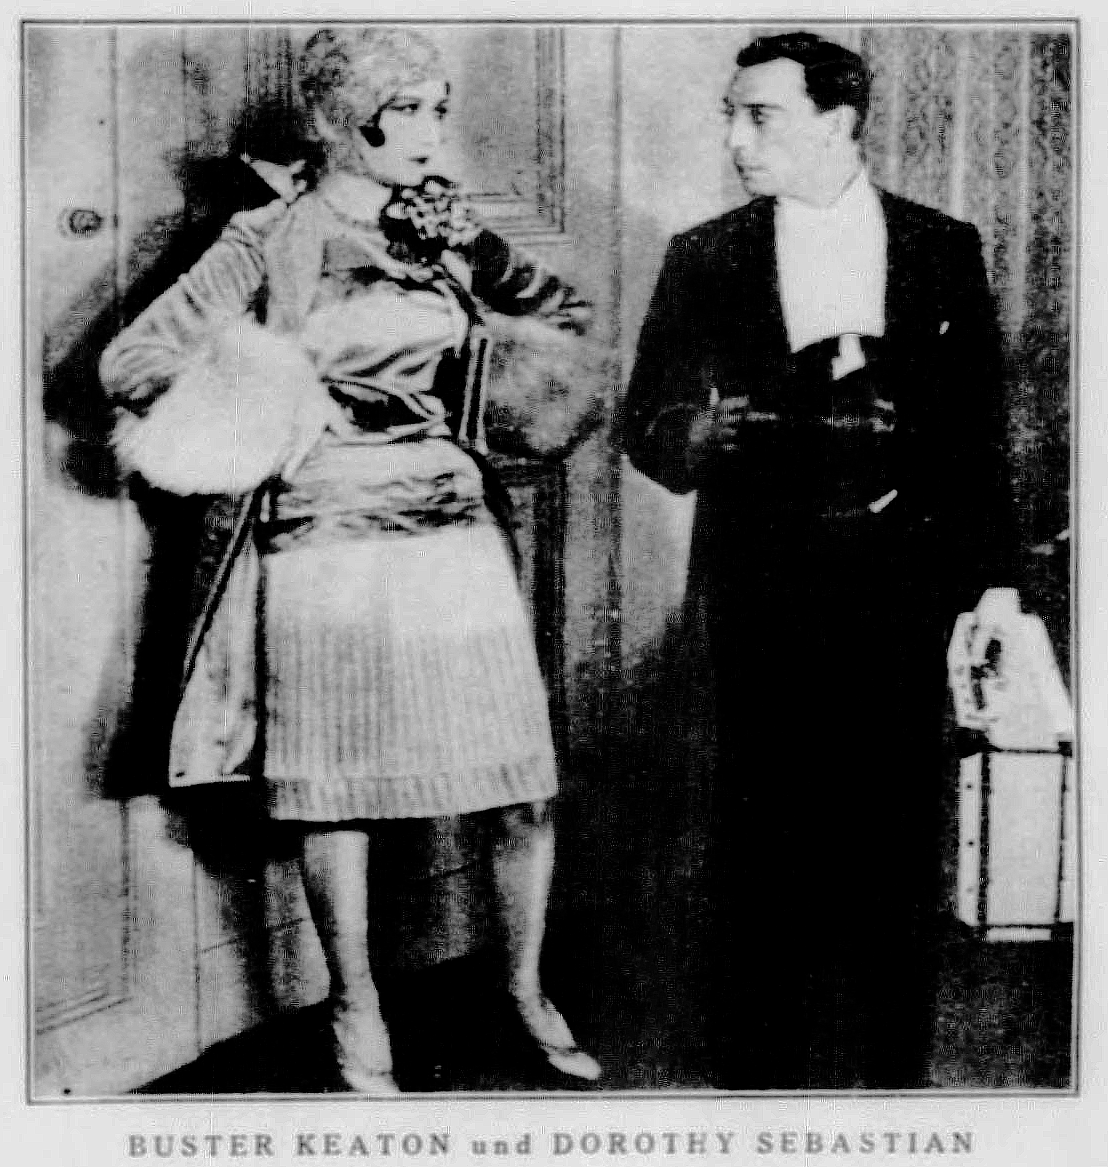 Buster Keaton and Dorothy Sebastian 
Spite Marriage - 1929

-Kinematograph - 1930

#busterkeaton #dorothysebastian #damfino #oldhollywood #silentfilms